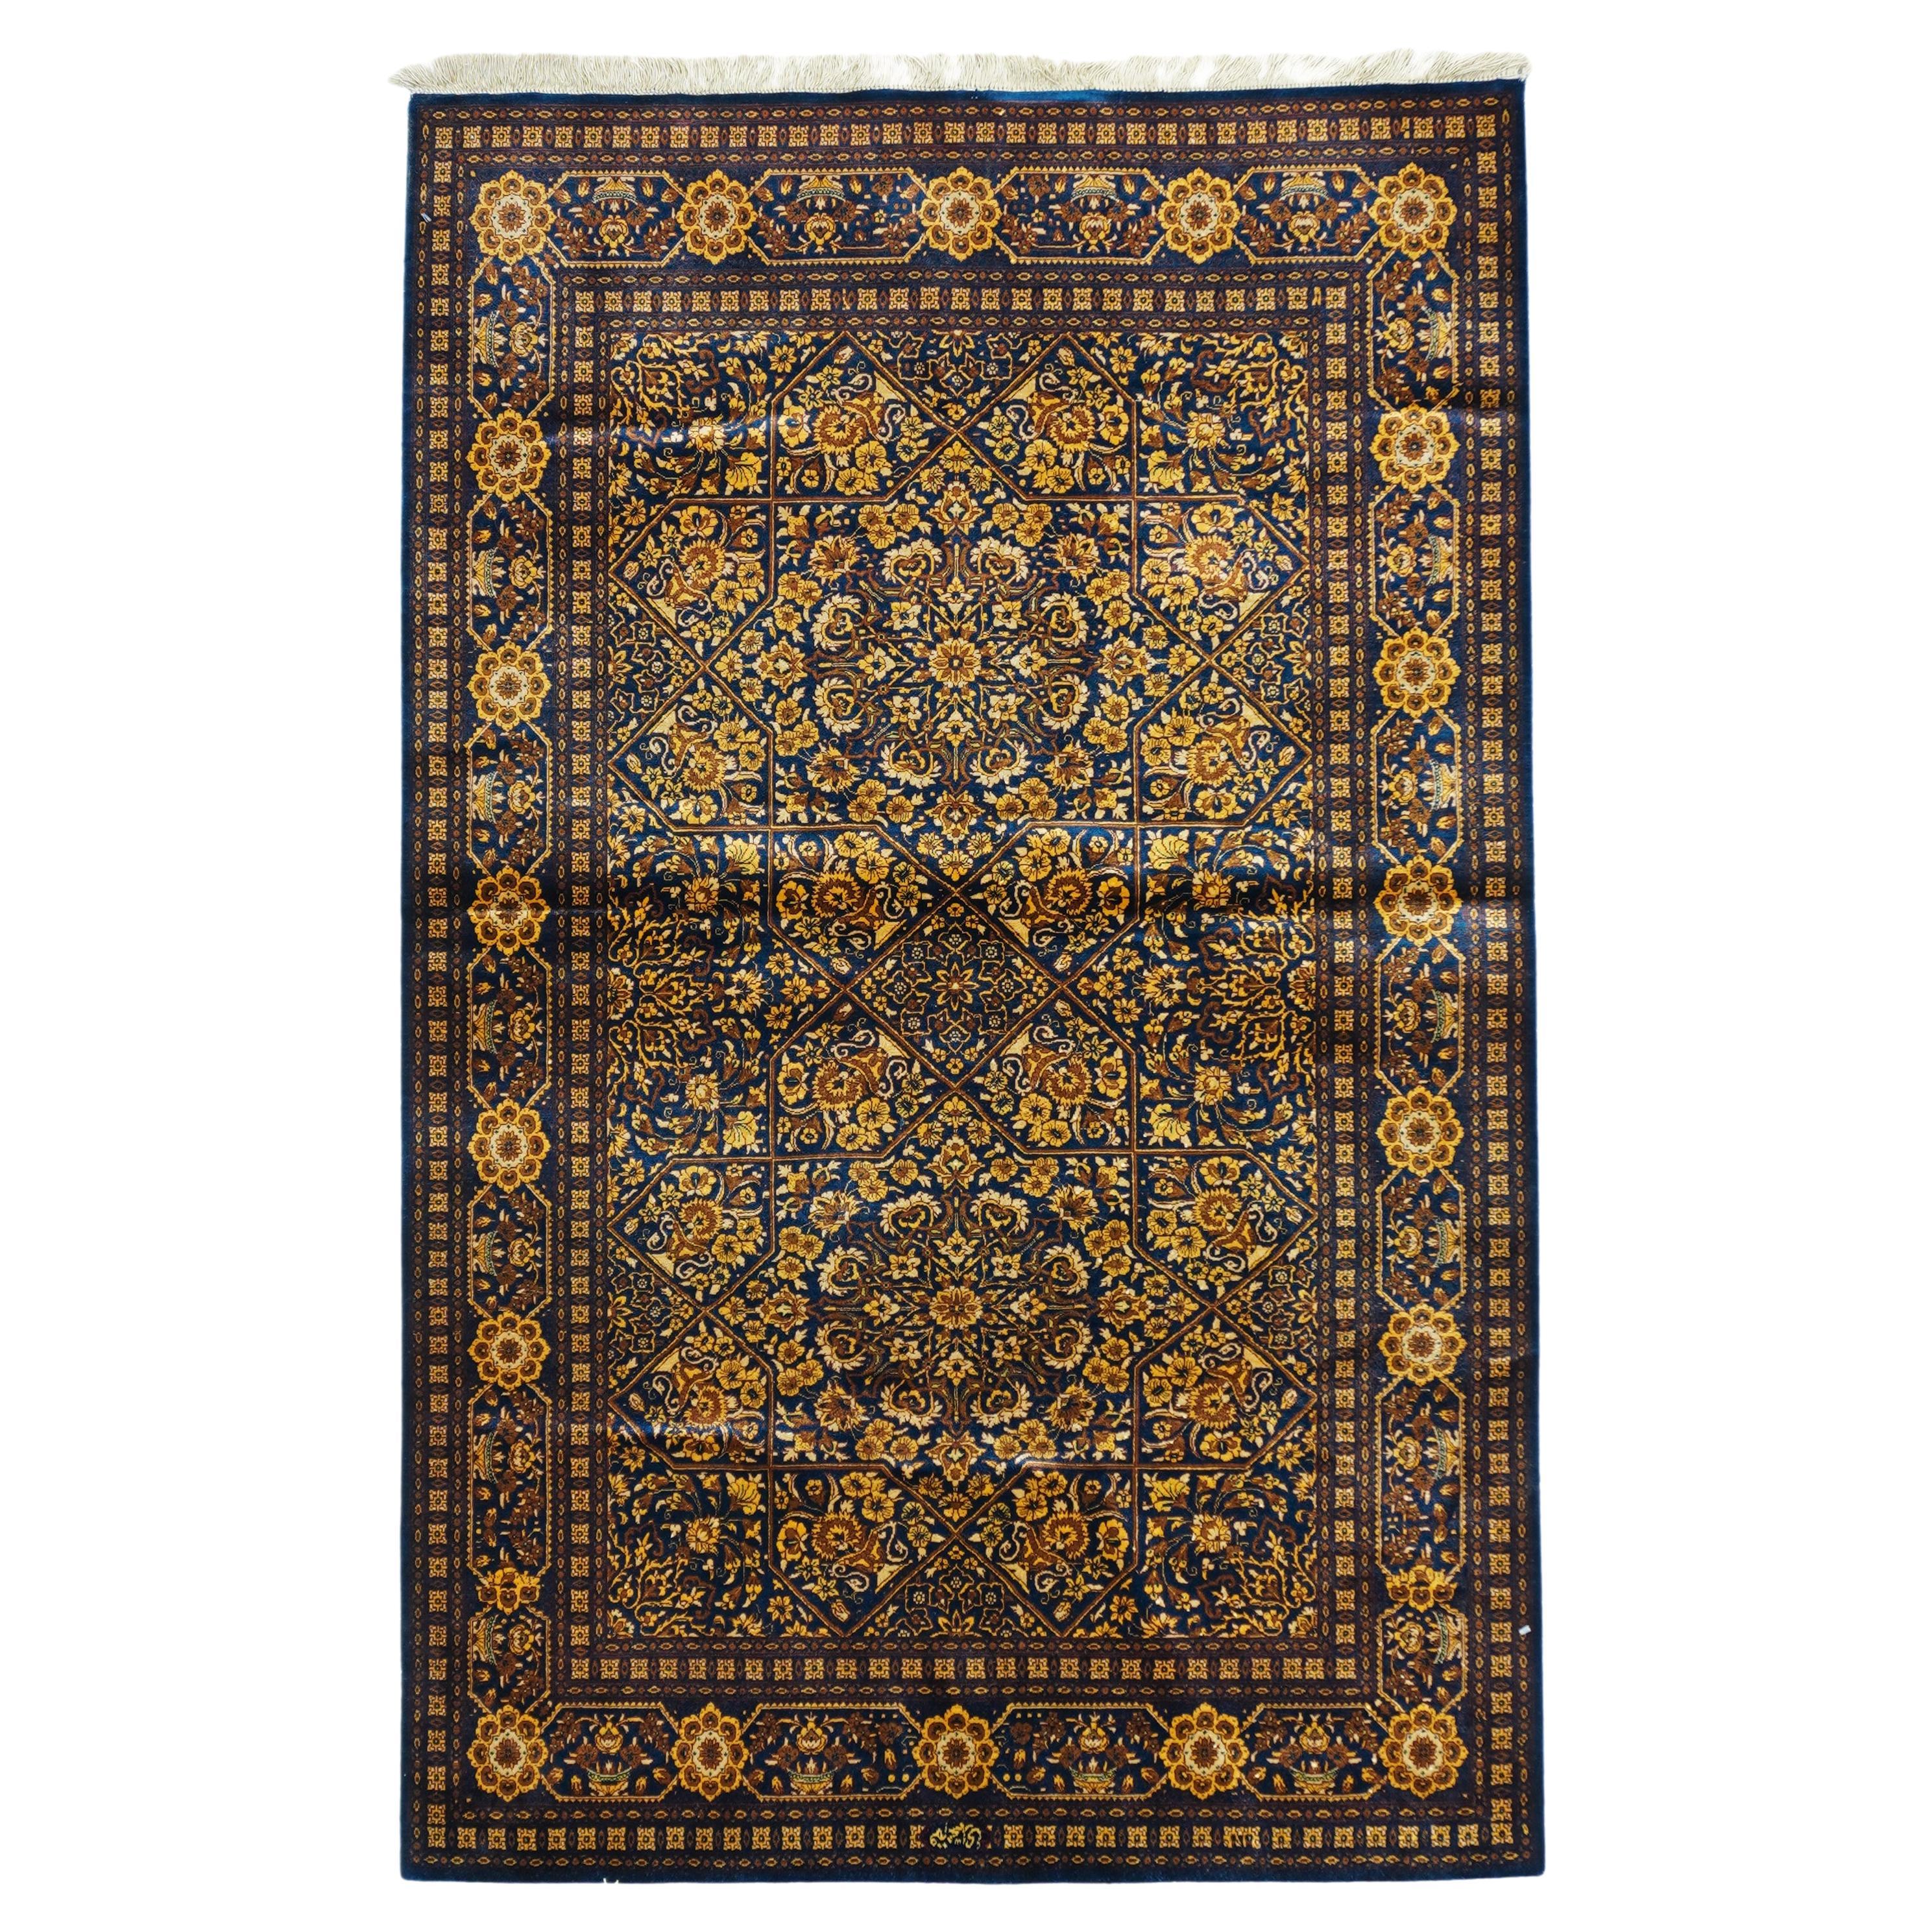 Extremely Fine Persian Silk Qum Rug 3'2'' x 5'2''